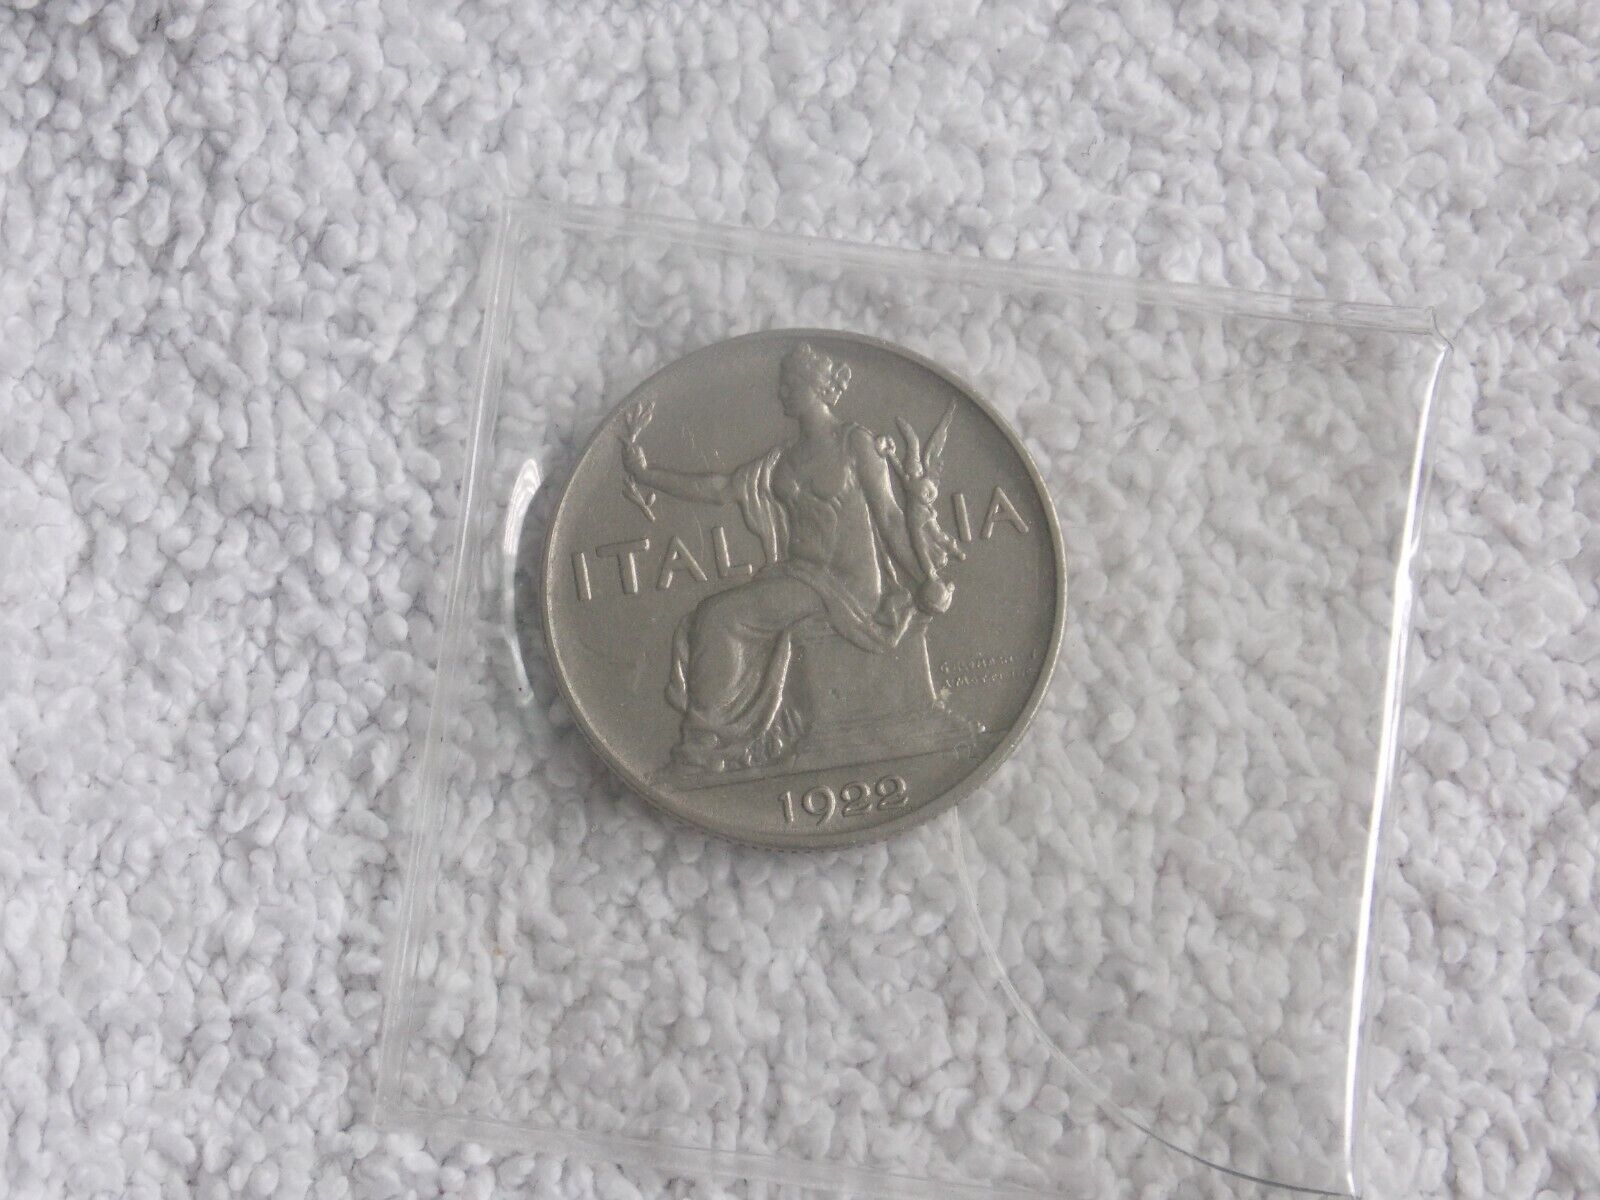 Italy Fascist coins Без бренда - фотография #3